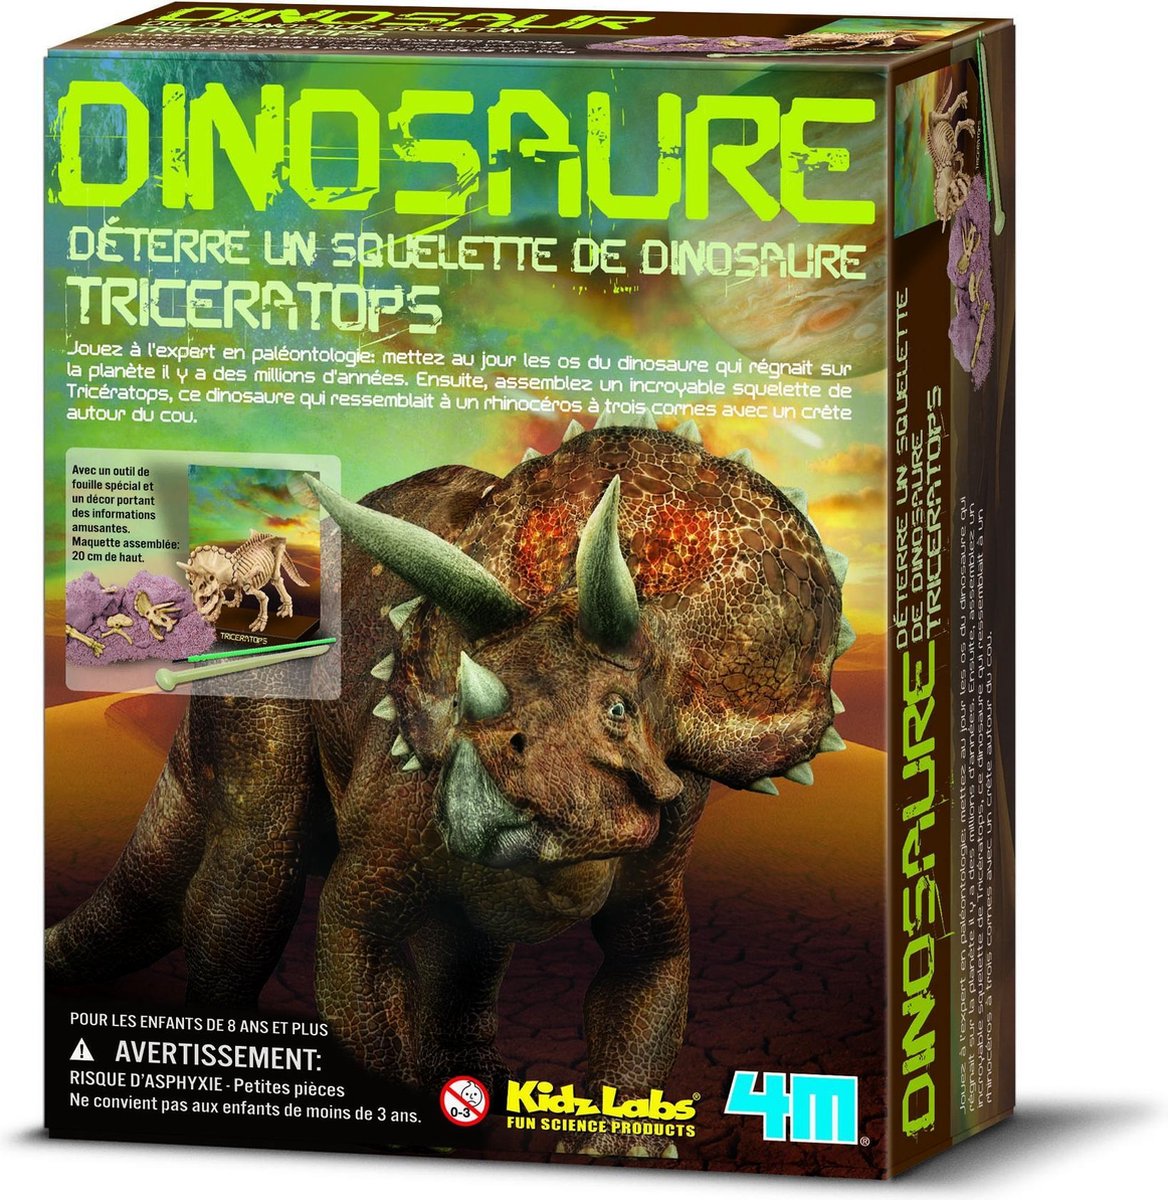 4m Kidzlabs: graaf-je-dinosaurus-op triceratops (franstalig)